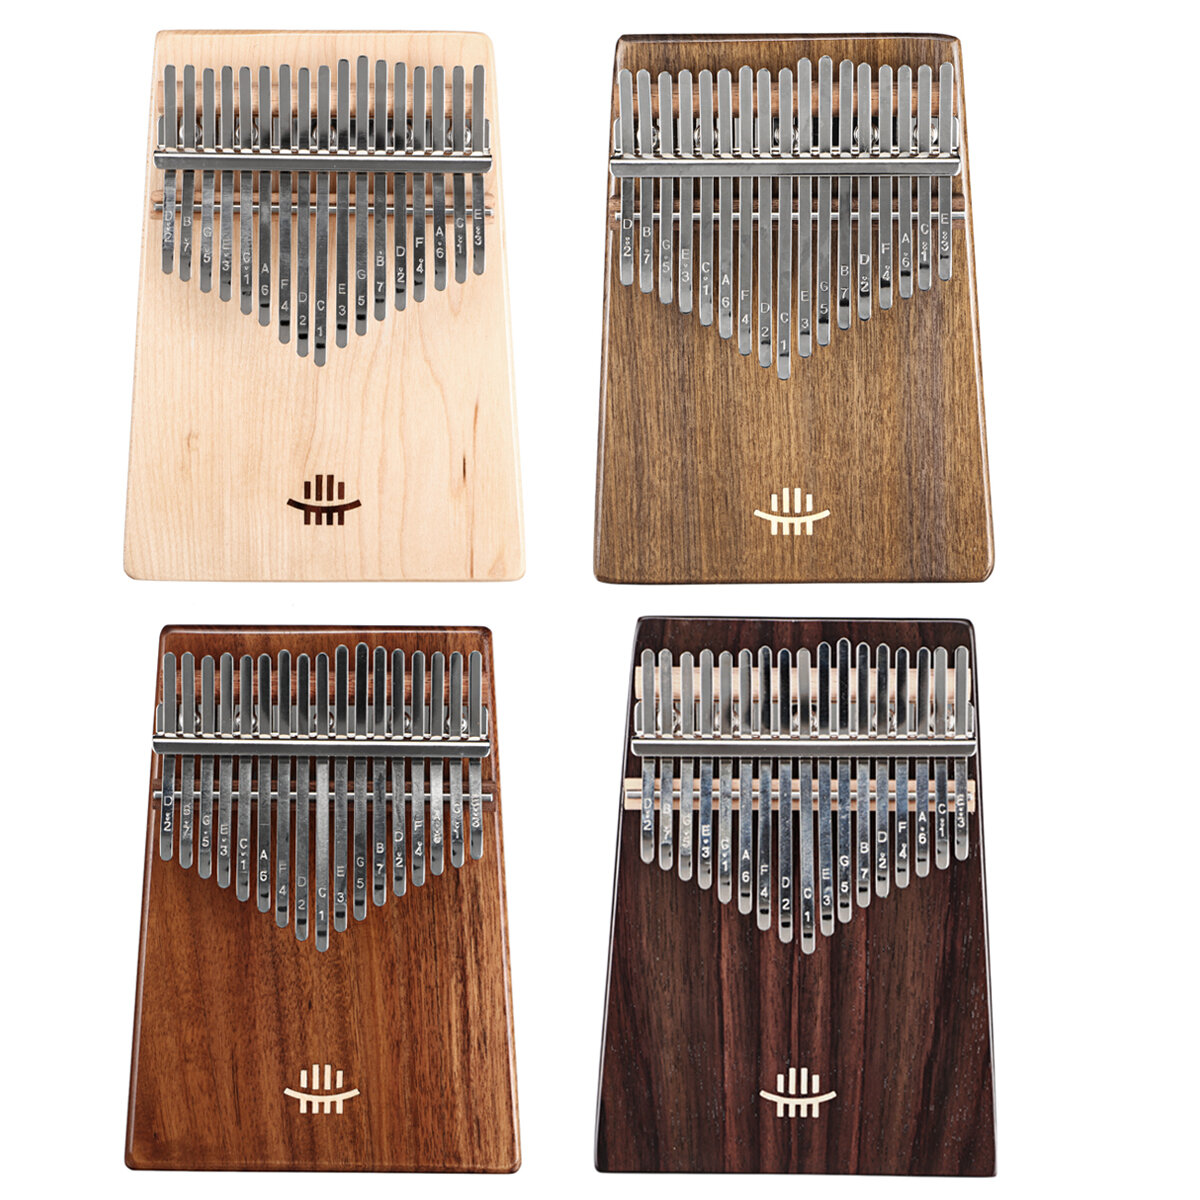 HLURU 17 Keys Wood Kalimba Bottom Hole Style Mahogany Thumb Piano Musical Instrument for Beginner